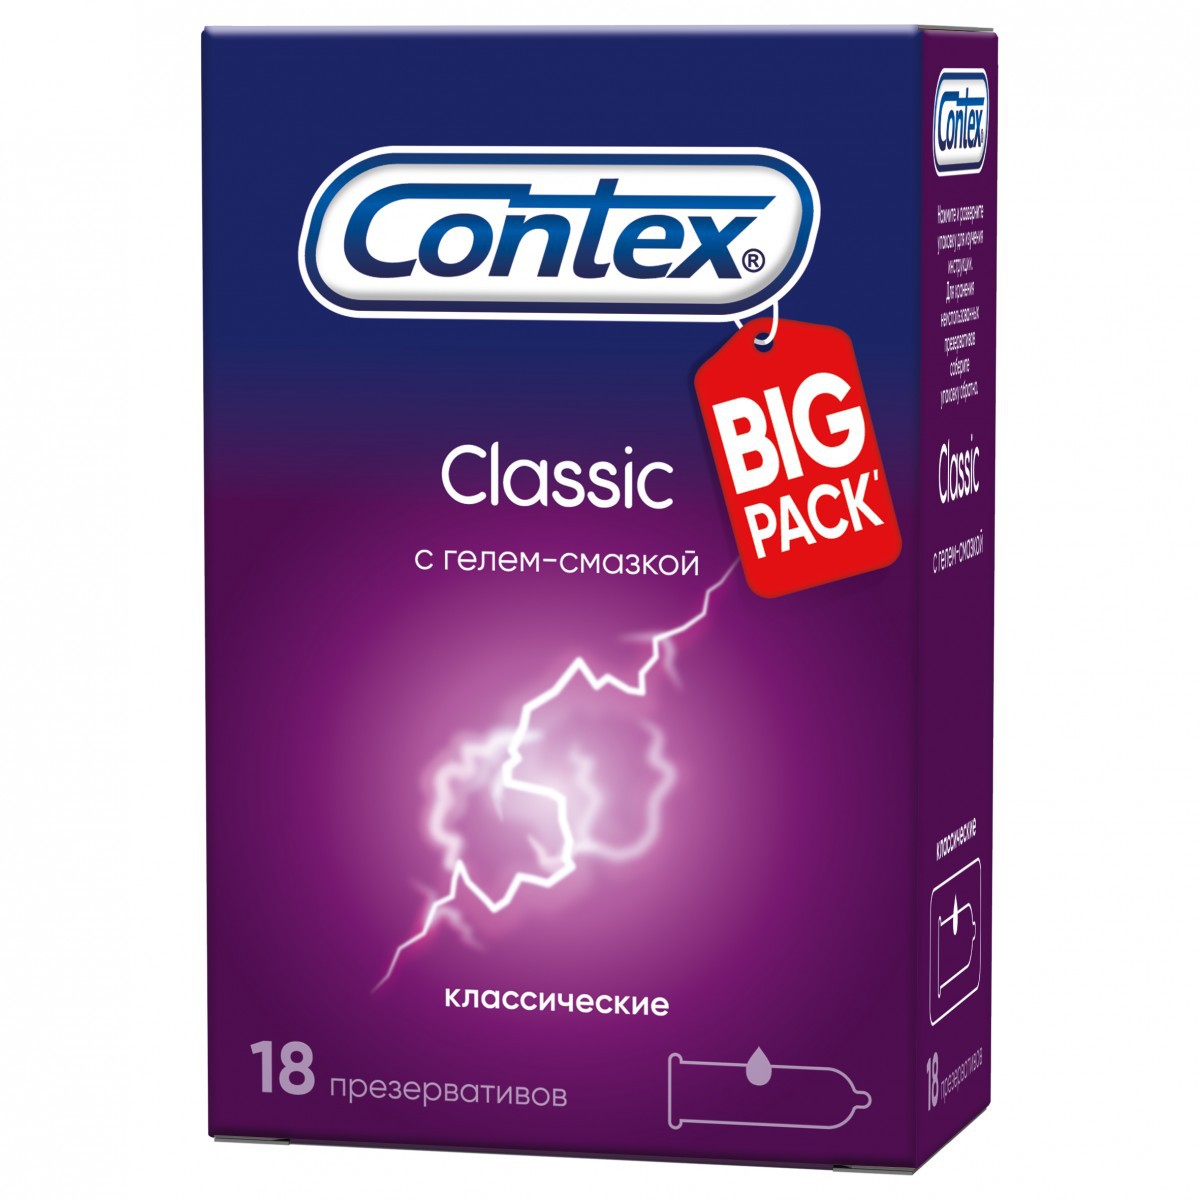 Презервативы CONTEX Classic классические с гелем-смазкой N18 уп